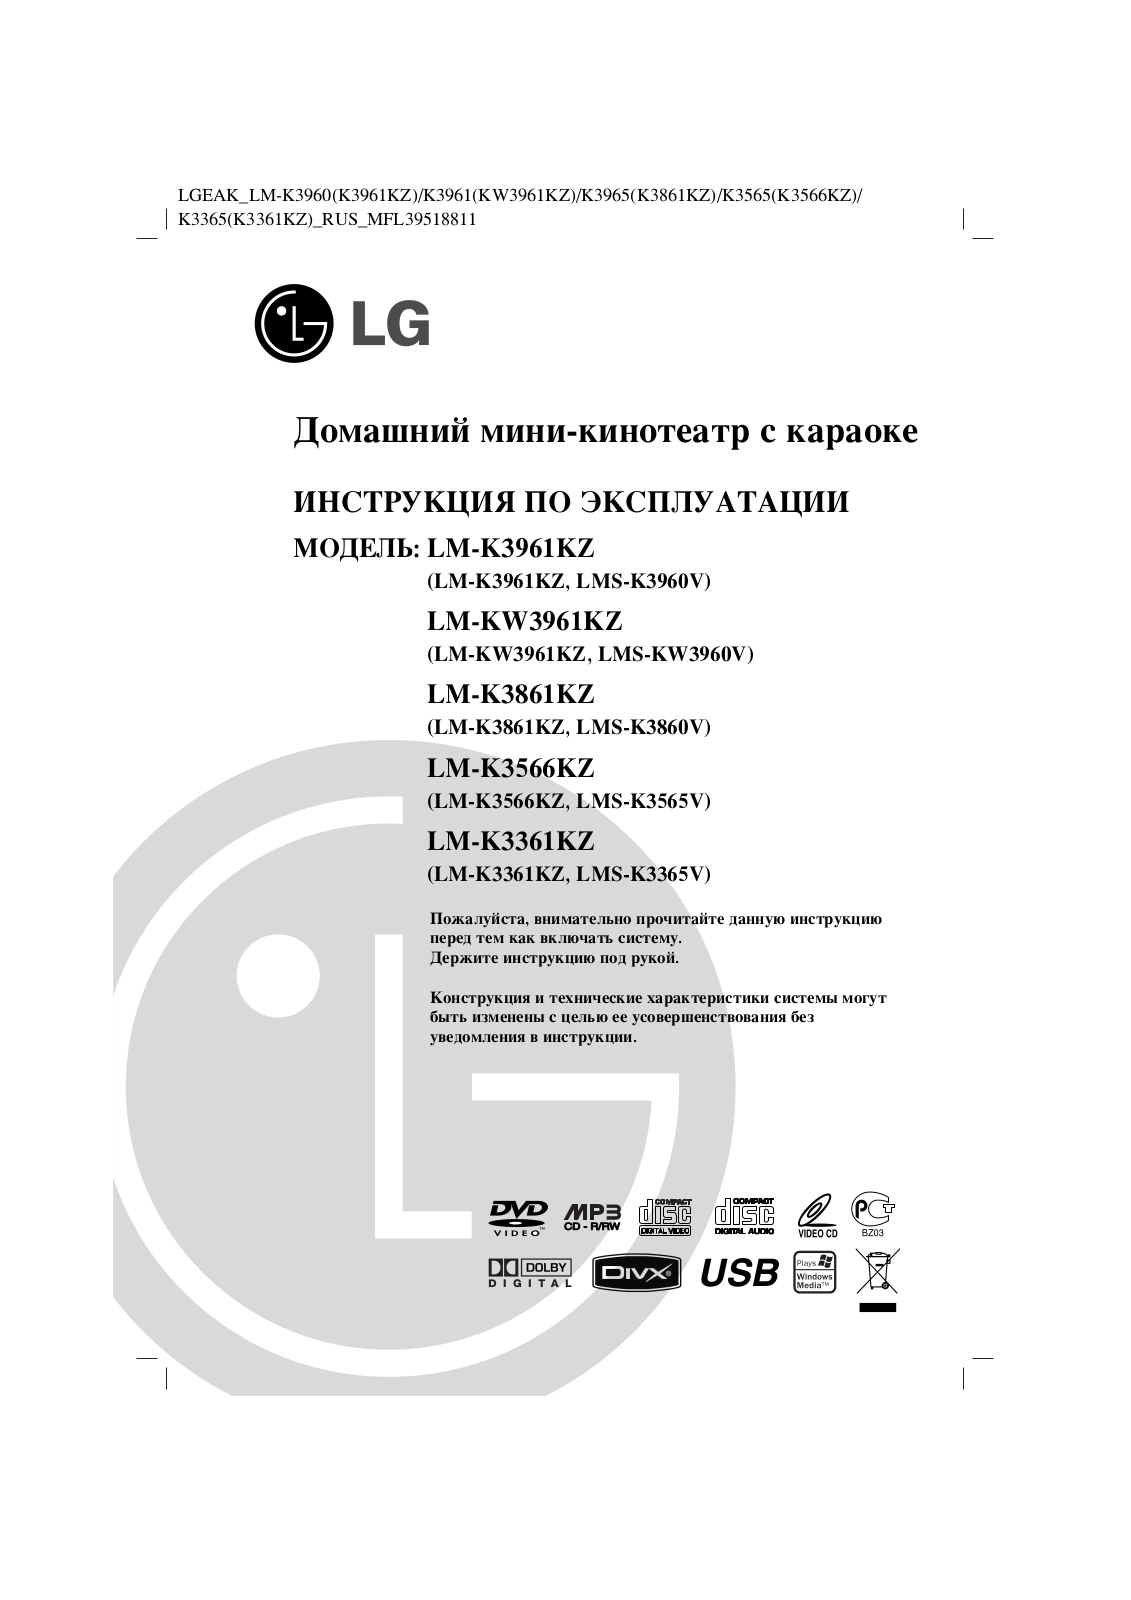 LG LM-K3361KZ User Manual